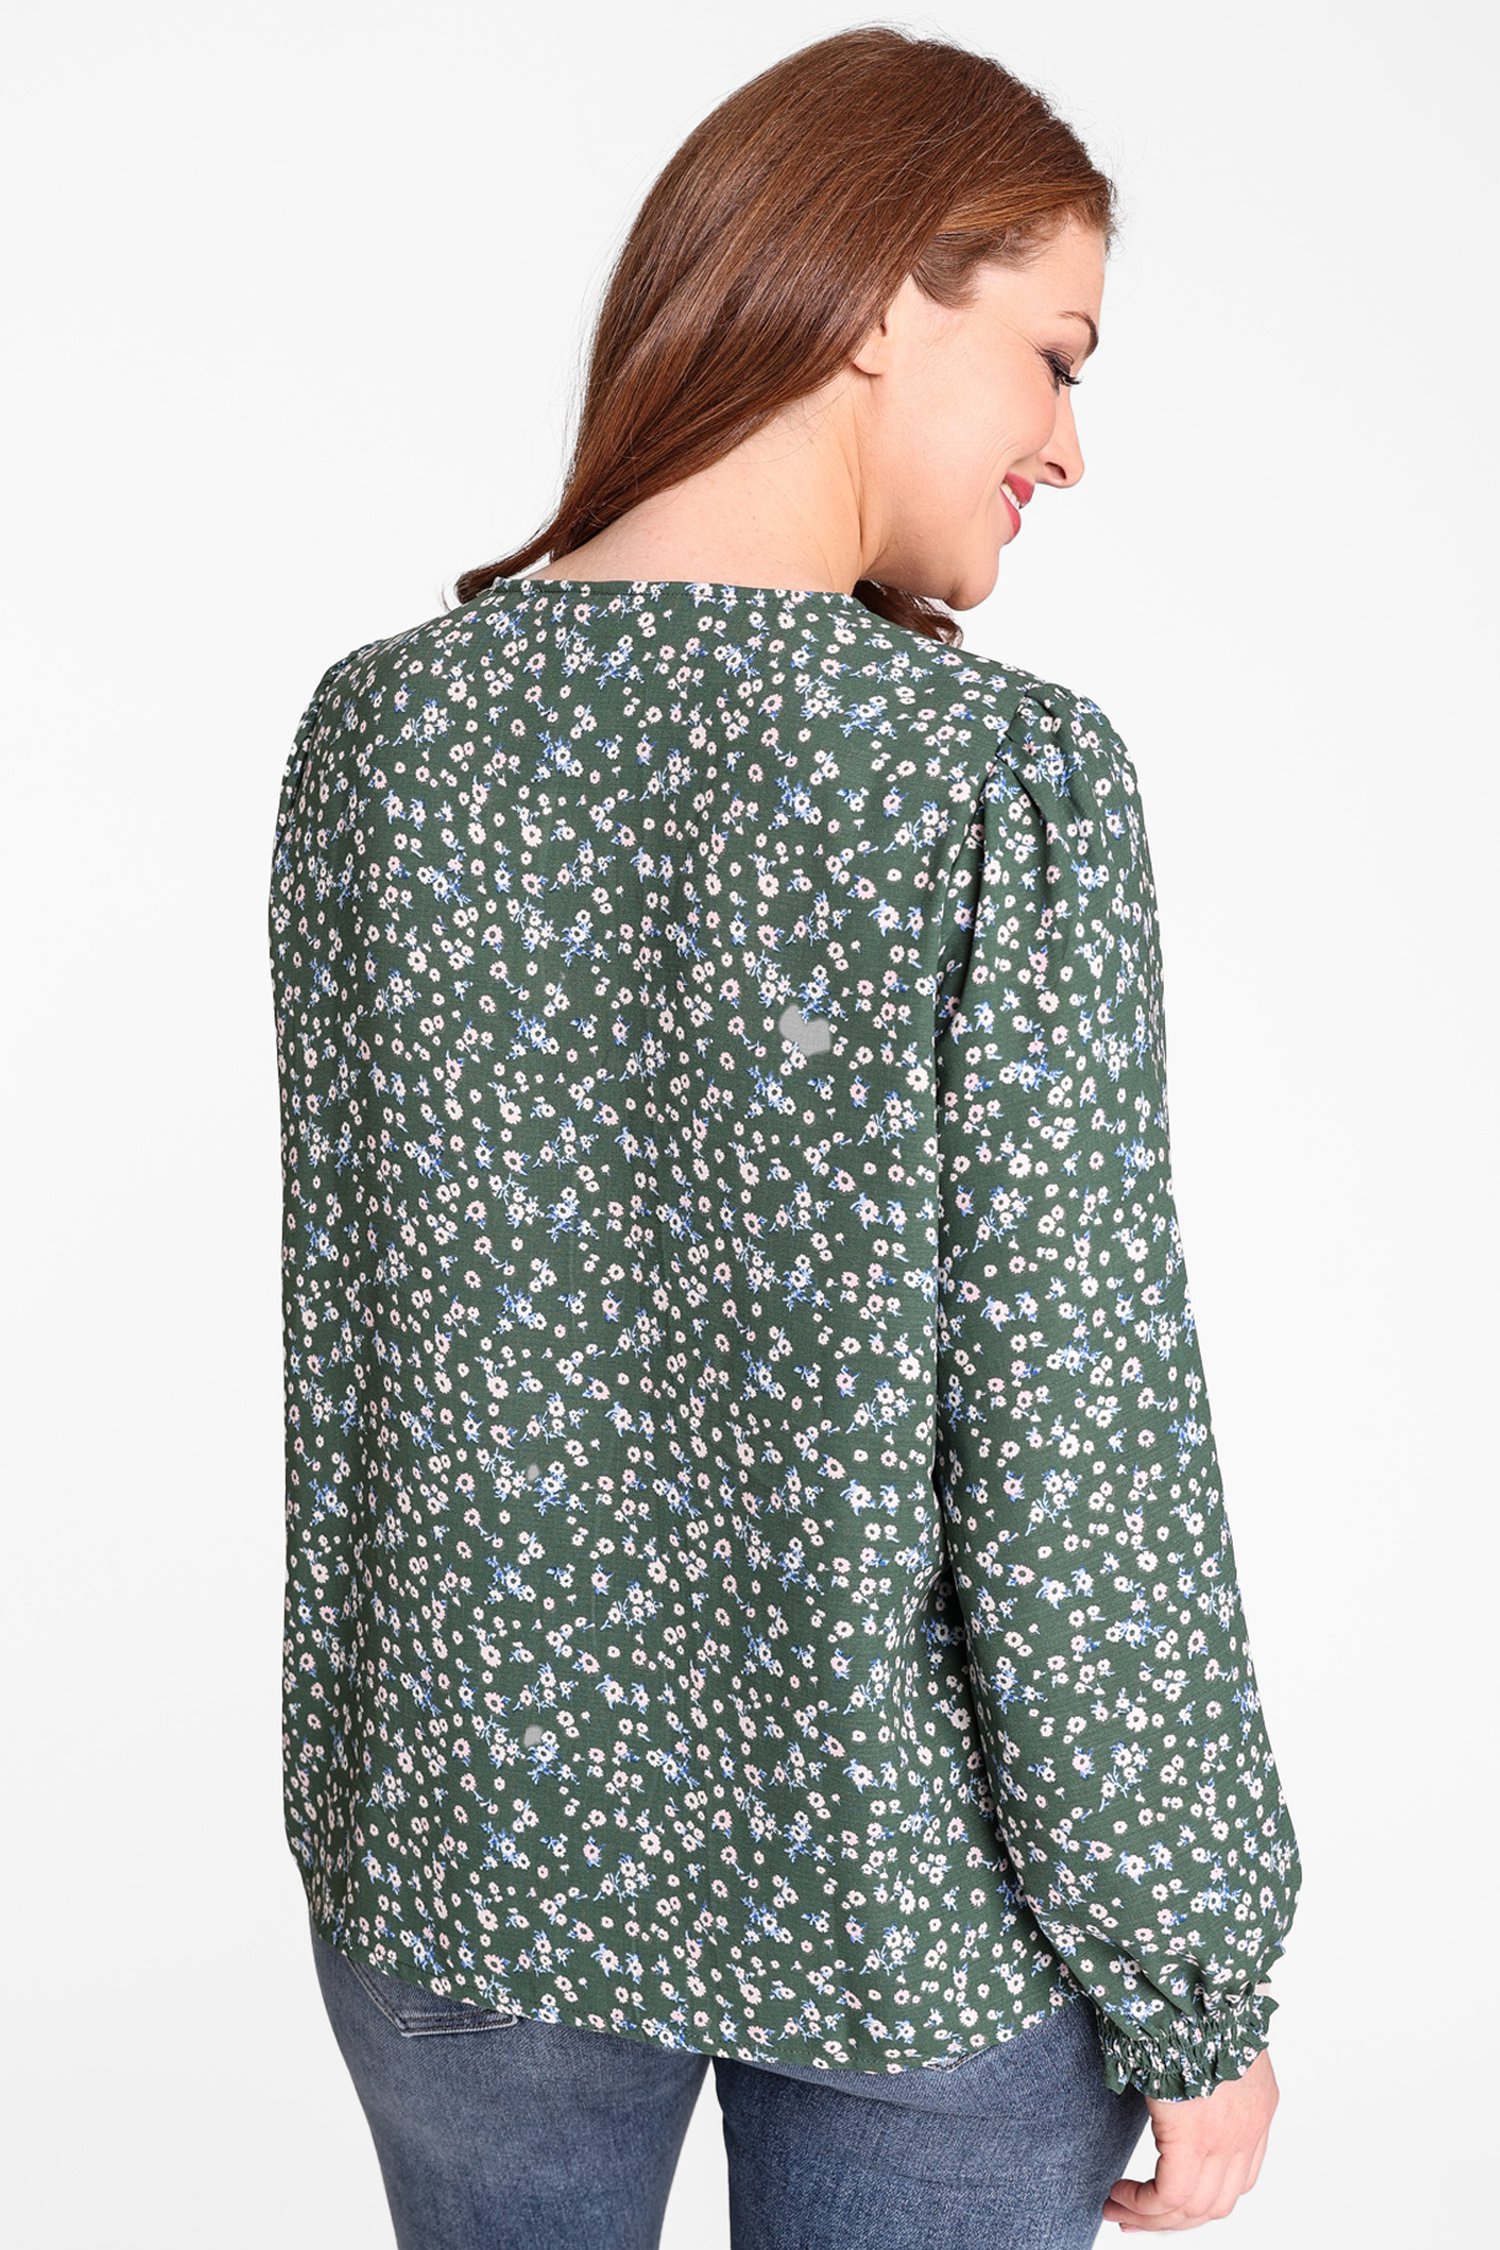 Groene blouse met bloemenprint van Only Carmakoma voor Dames